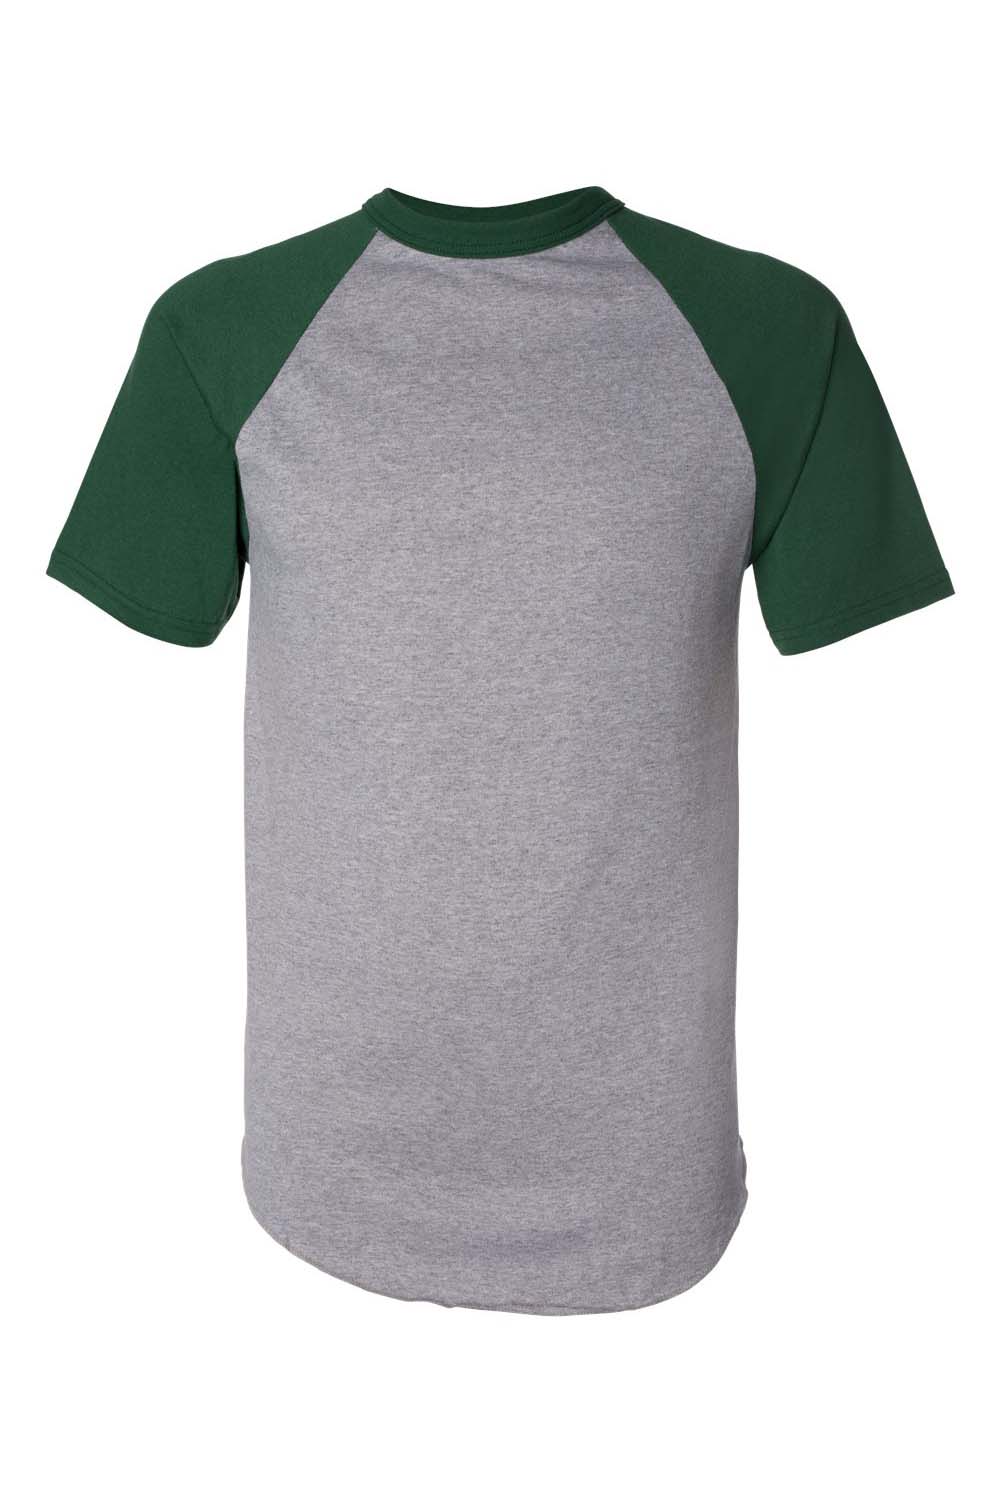 Augusta Sportswear 423 Mens Short Sleeve Crewneck T-Shirt Heather Grey/Dark Green Model Flat Front